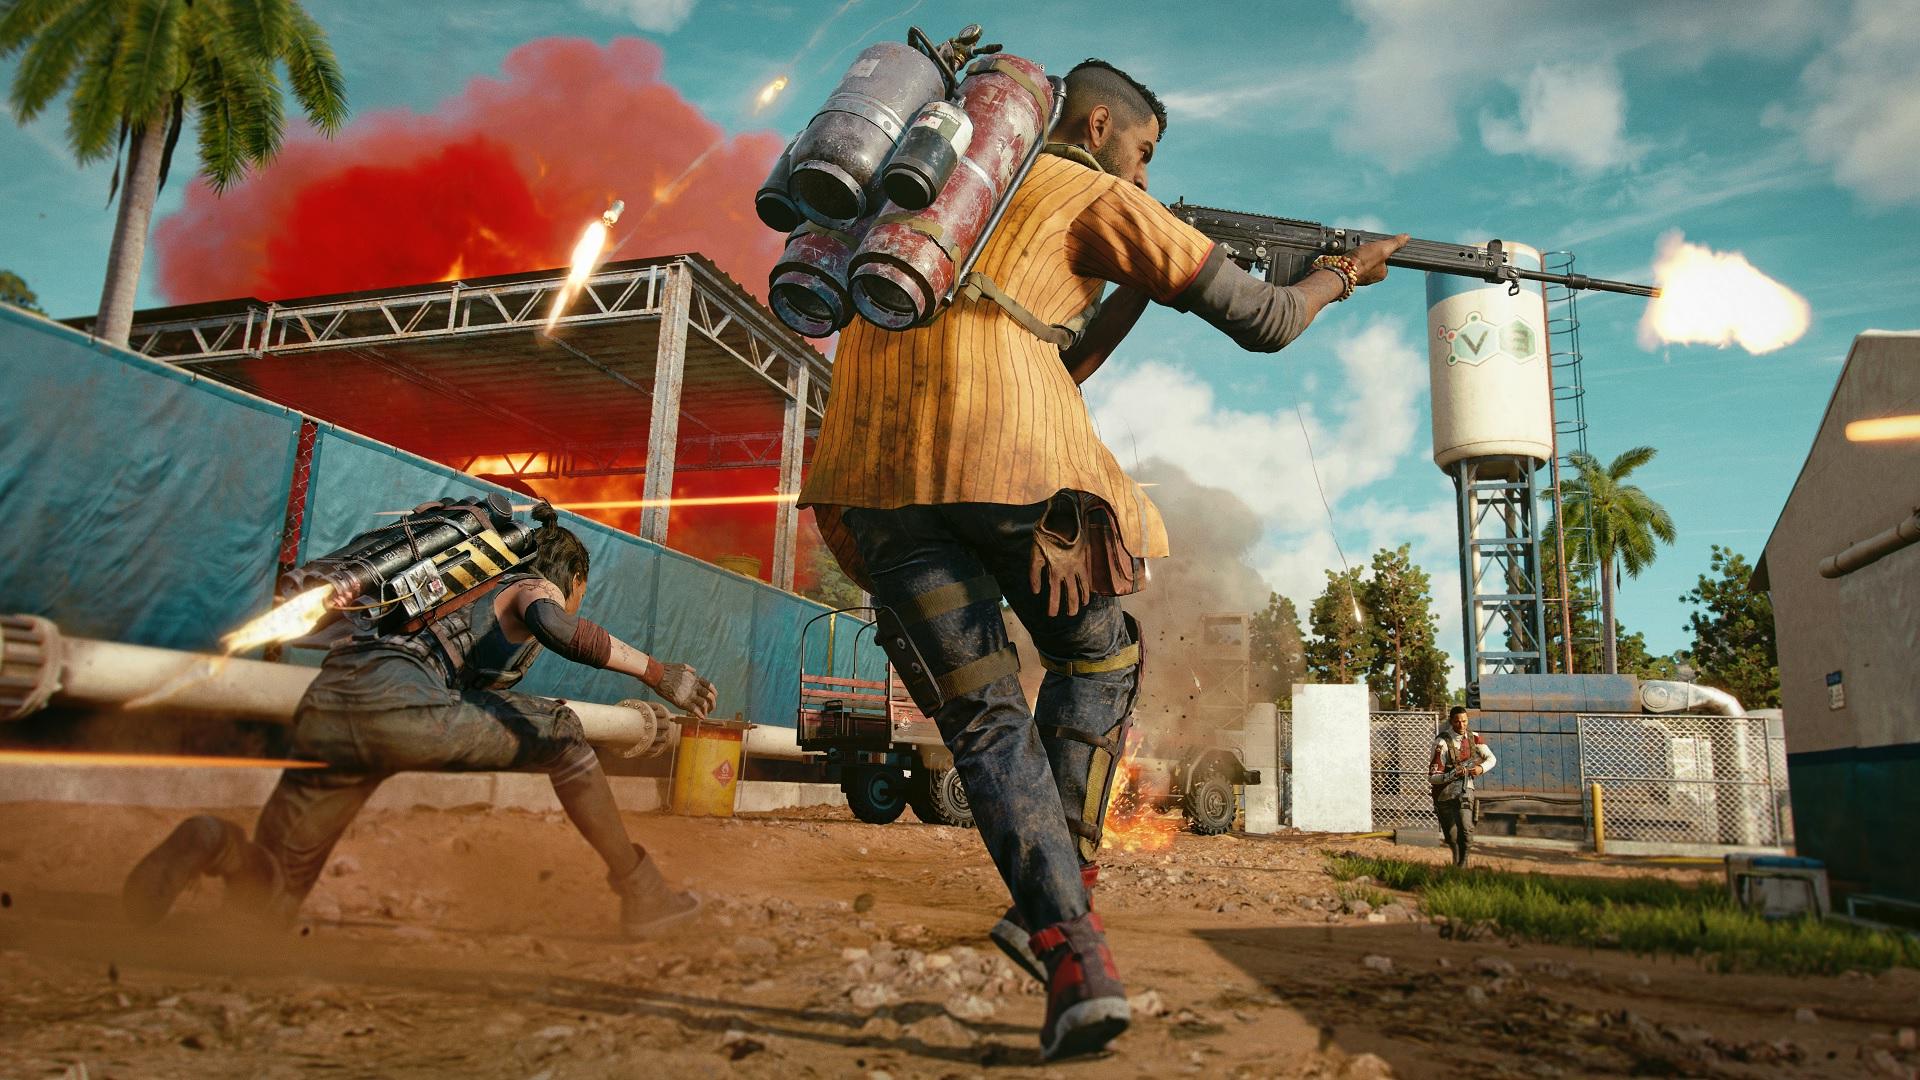 The chief designer of Far Cry has left Ubisoft